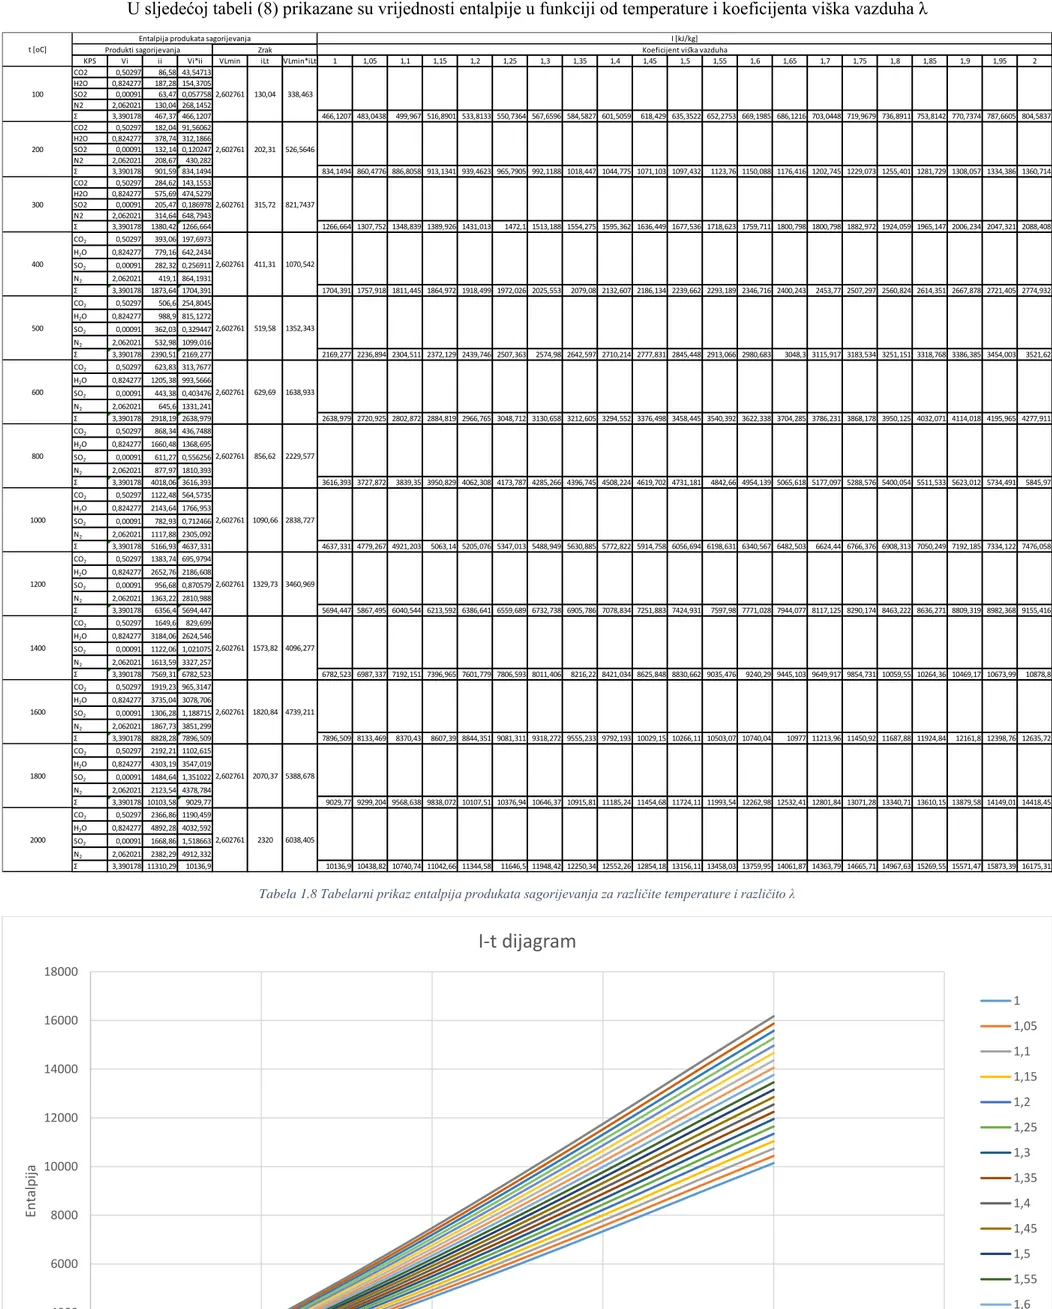 Tabela 1.8 Tabelarni prikaz entalpija produkata sagorijevanja za različite temperature i različito λ    